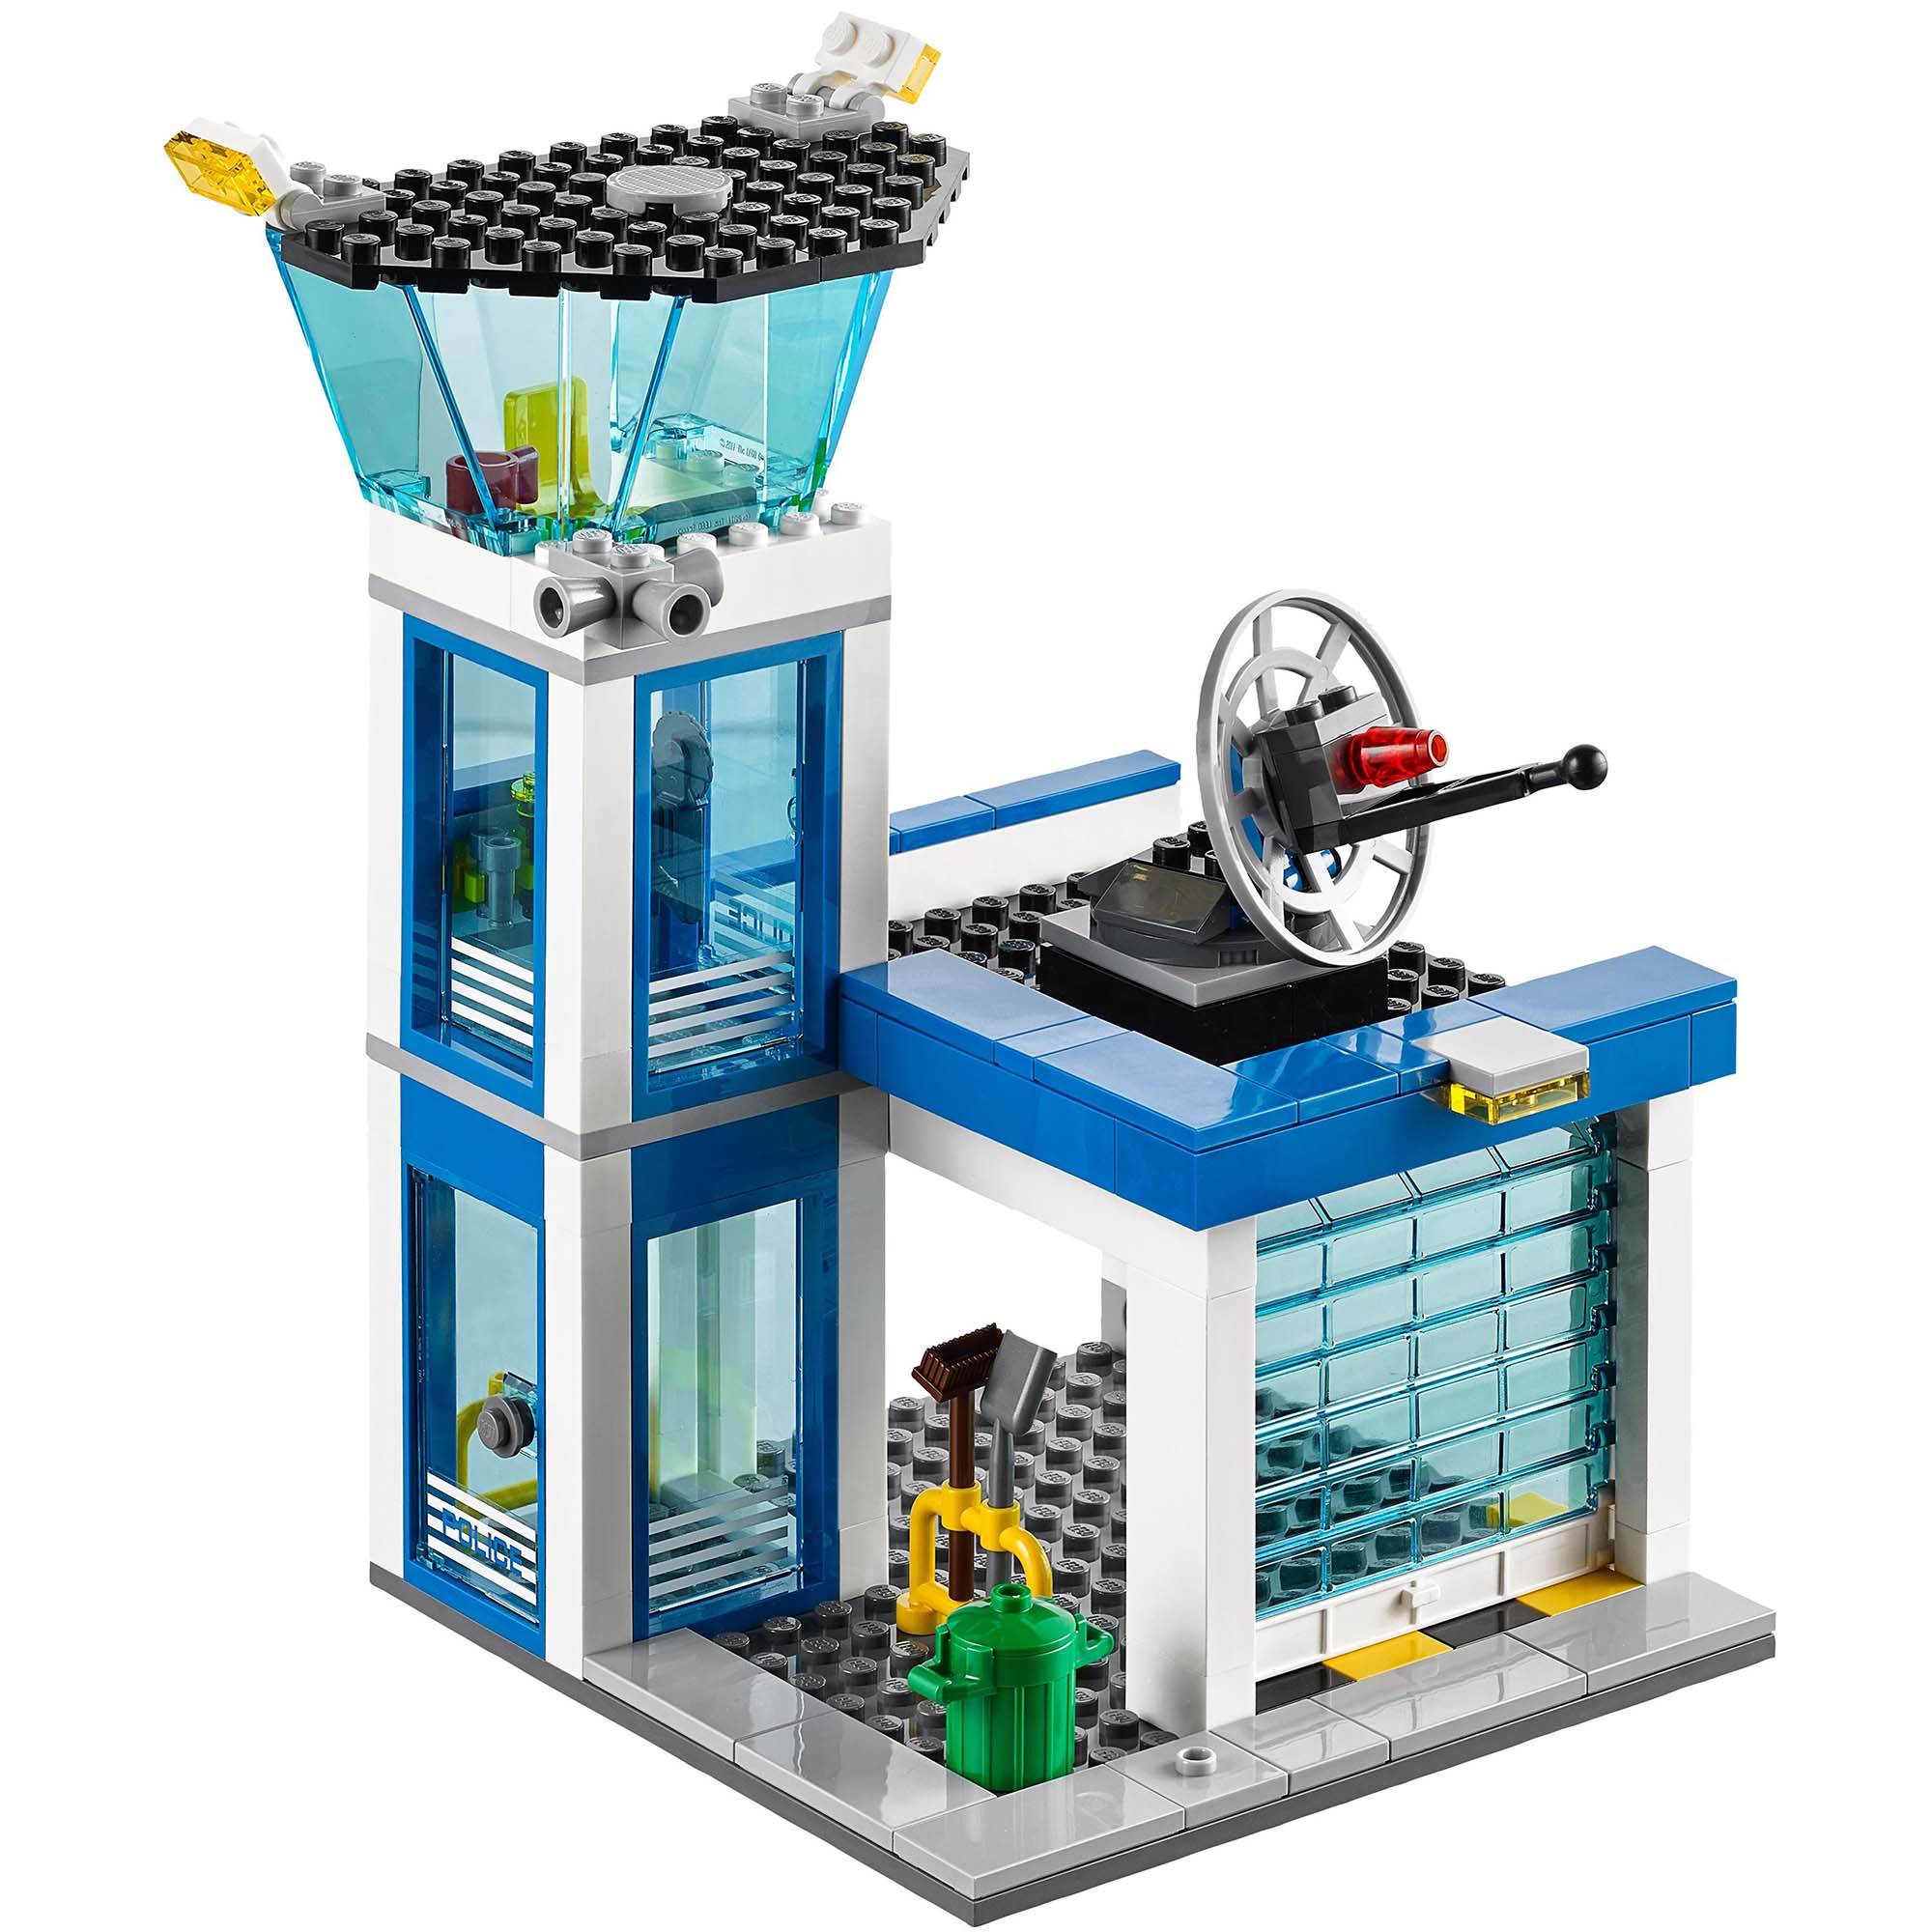 LEGO City 60047 - Police Station - image 2 of 7